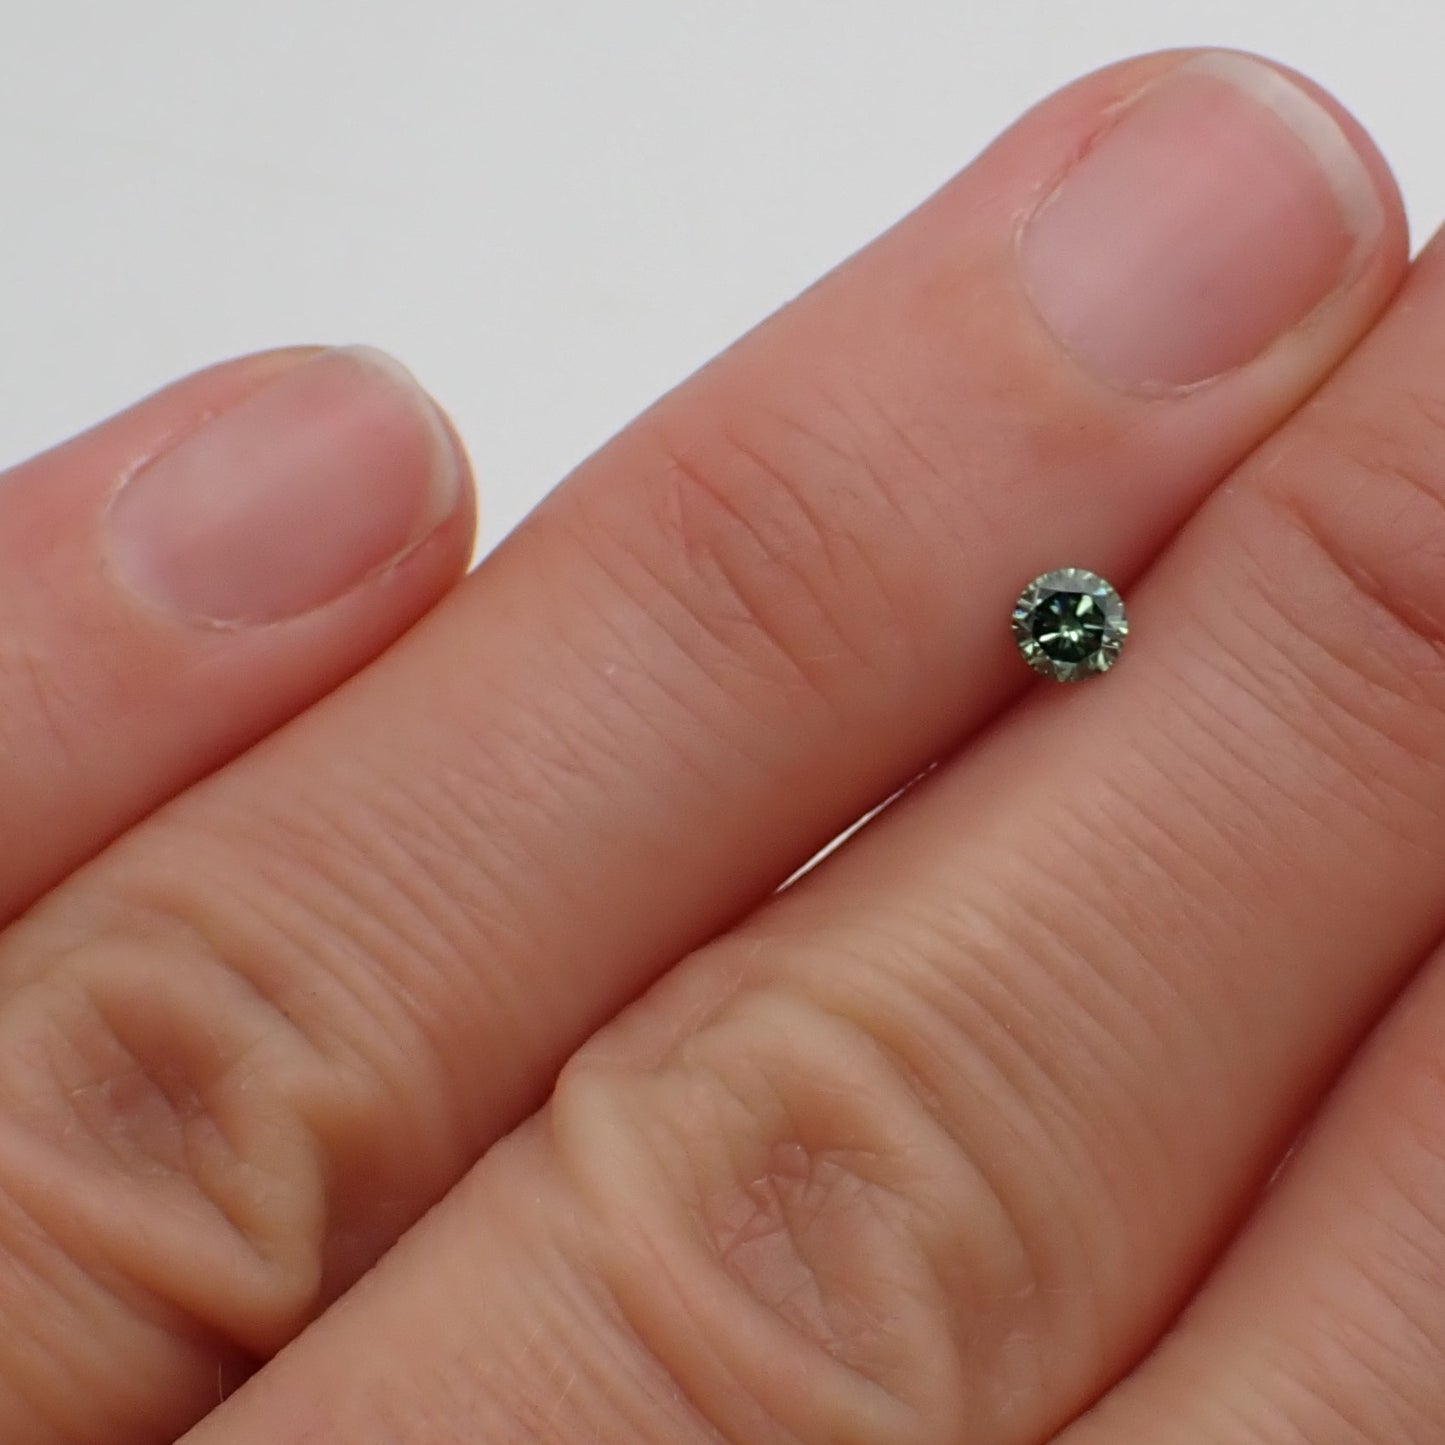 Recycled Green Diamond - Round Brilliant Cut 0.16ct